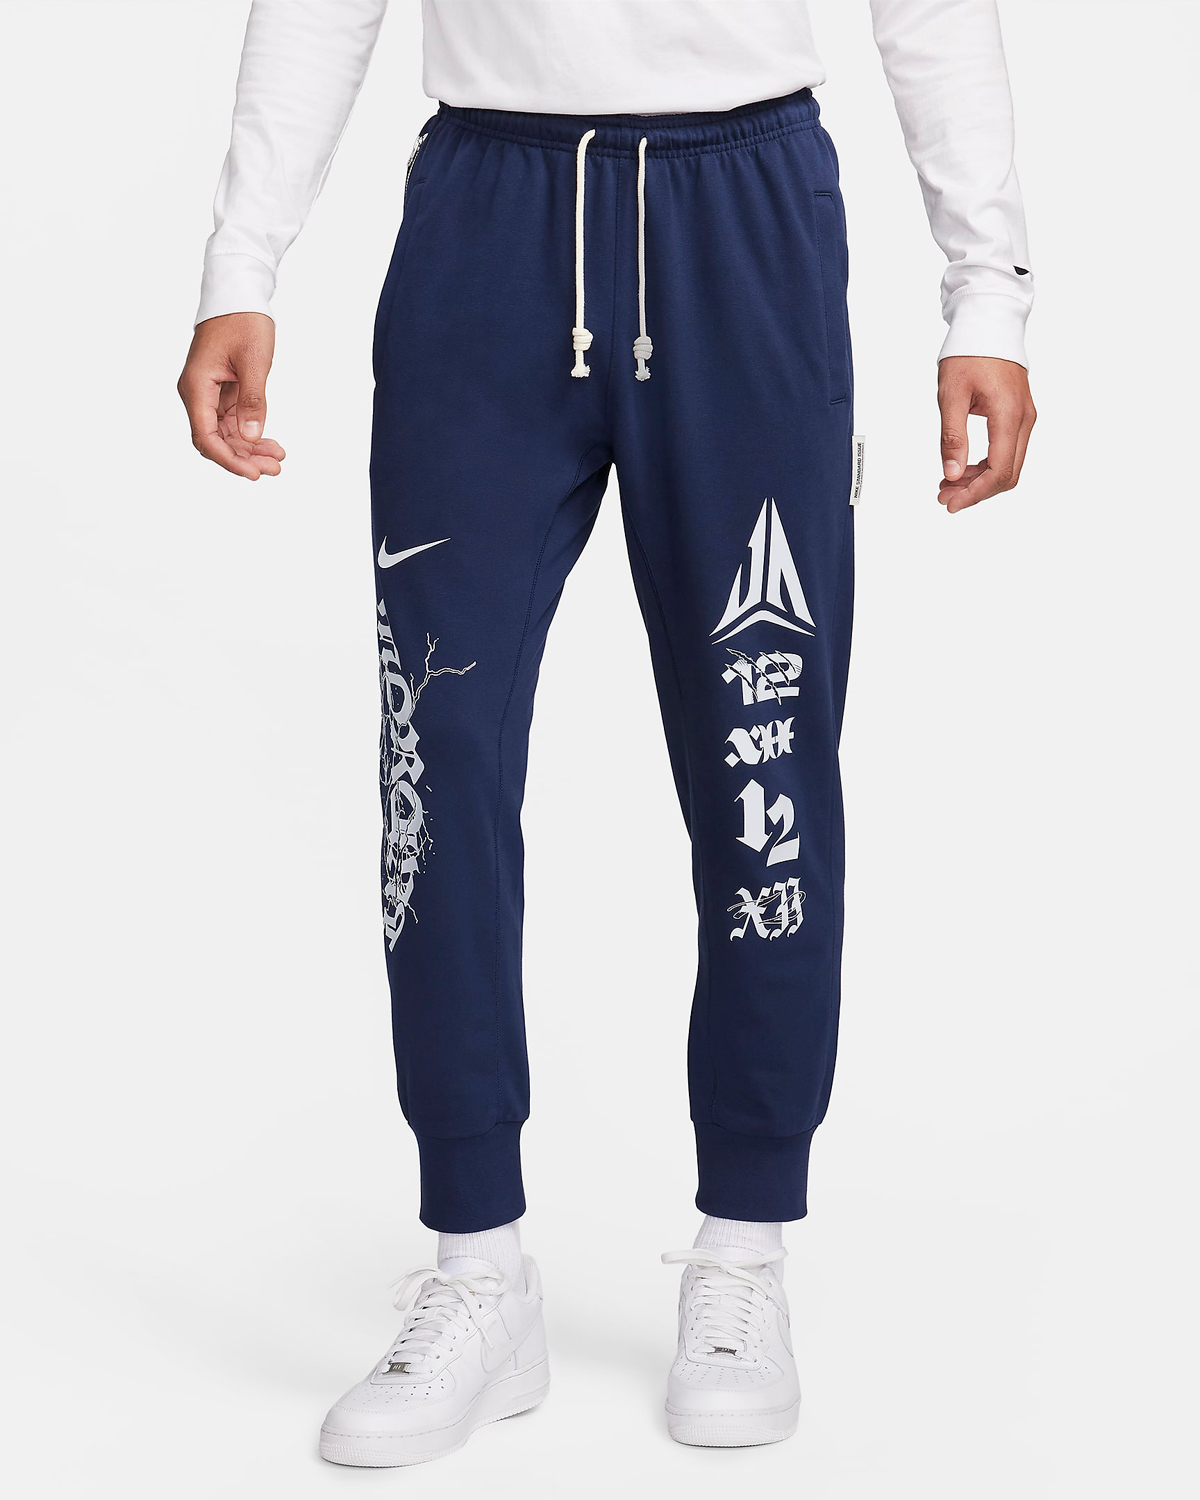 Nike-Ja-Standard-Issue-Basketball-Pants-Midnight-Navy